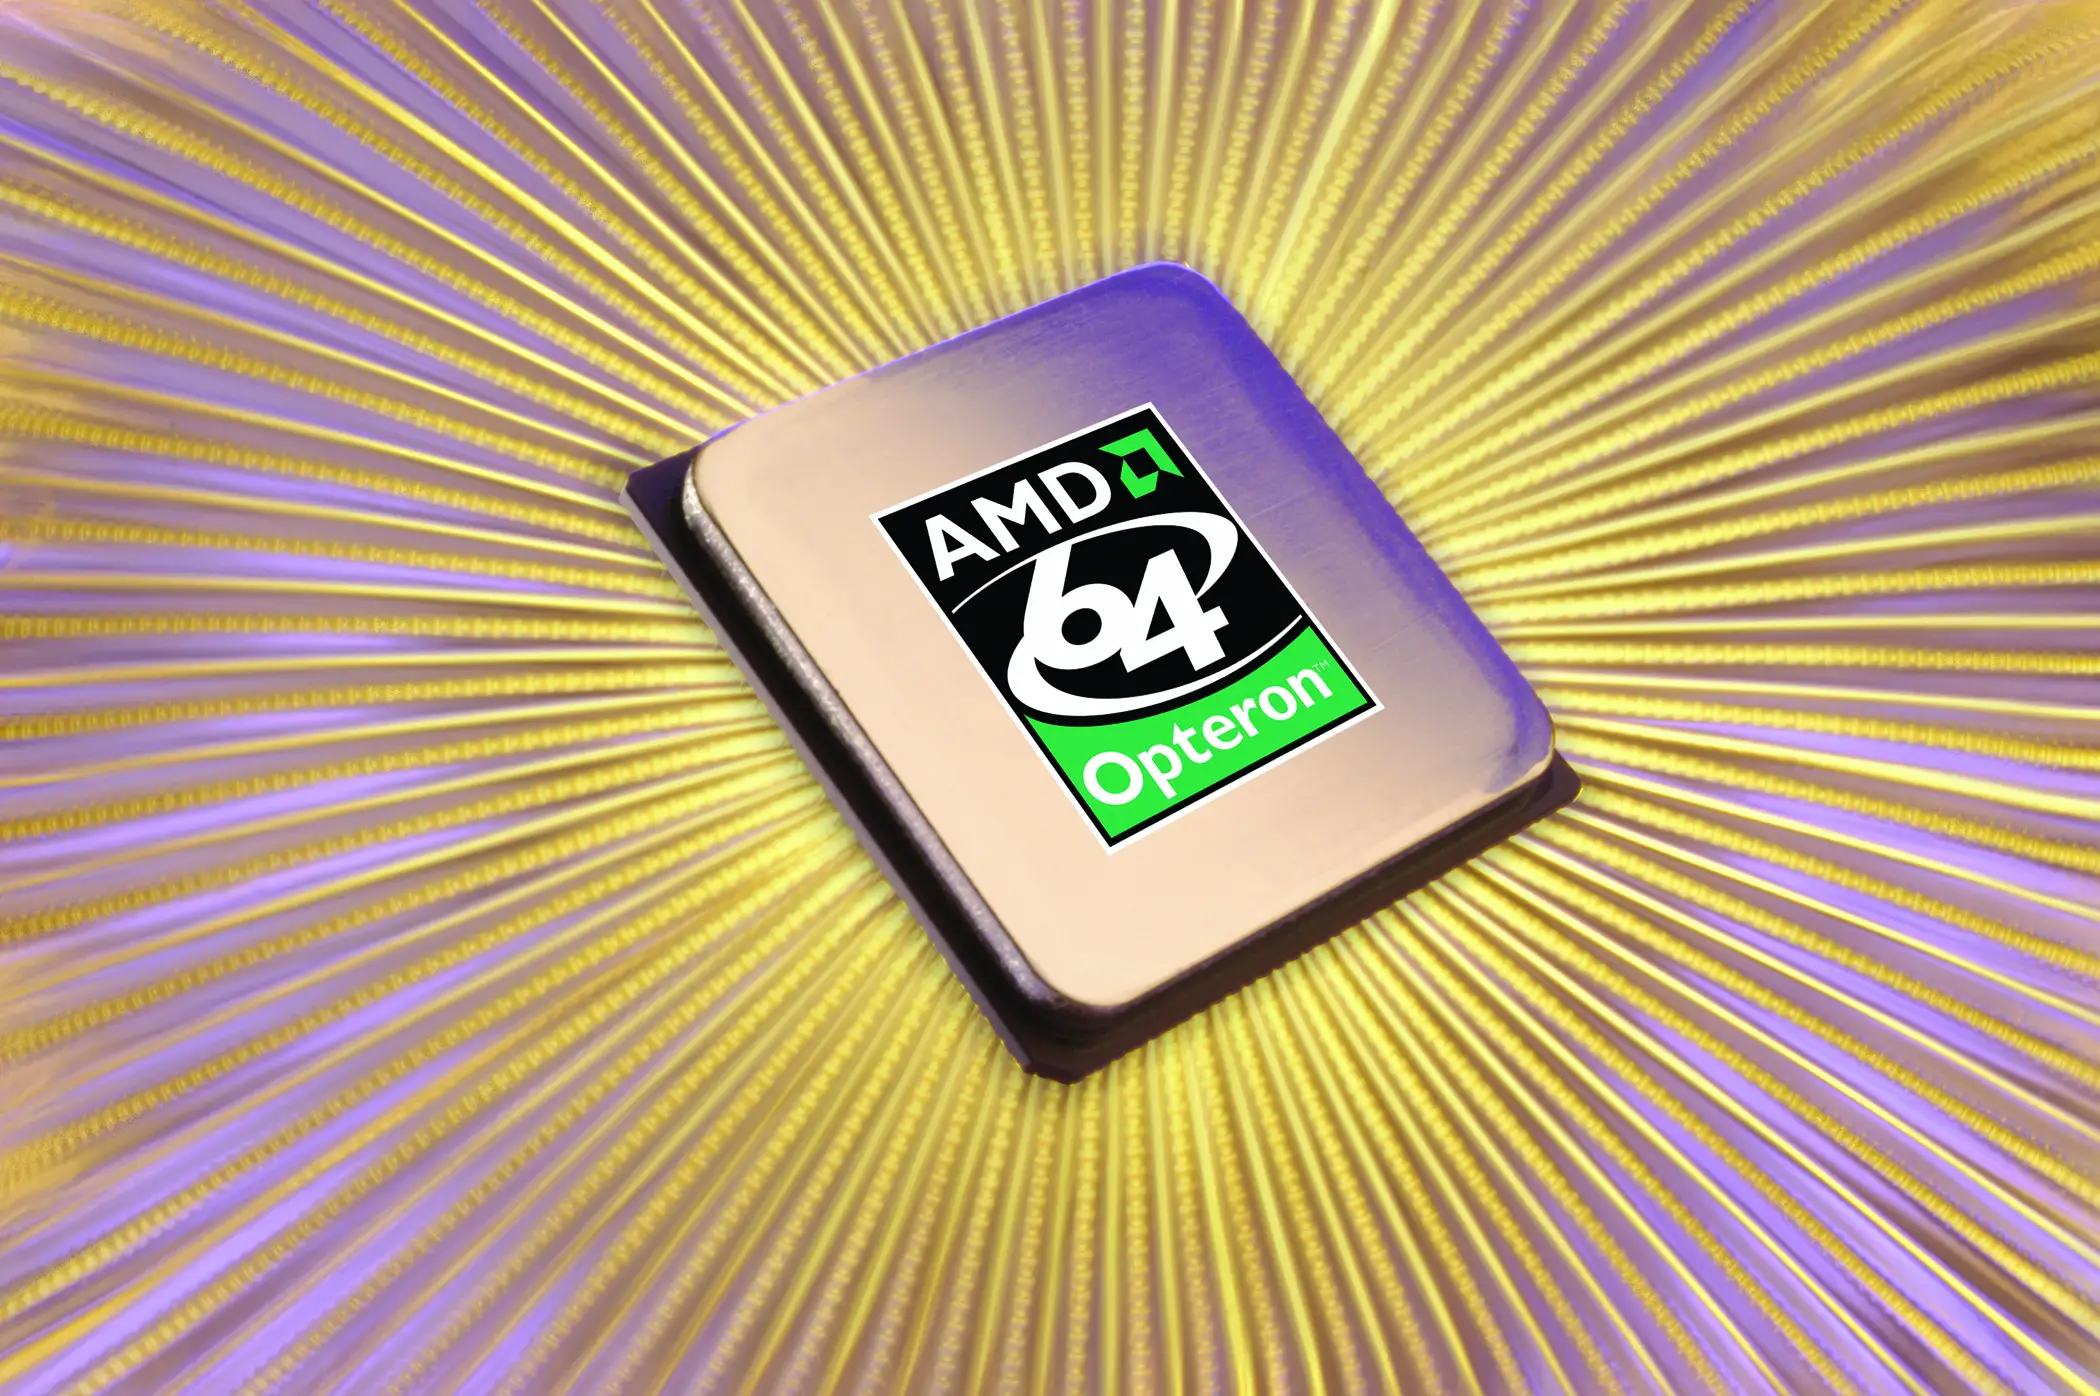 Amd 64 4400. AMD 64. 12 Ядерный процессор. AMD Opteron logo. AMD 64 лого.